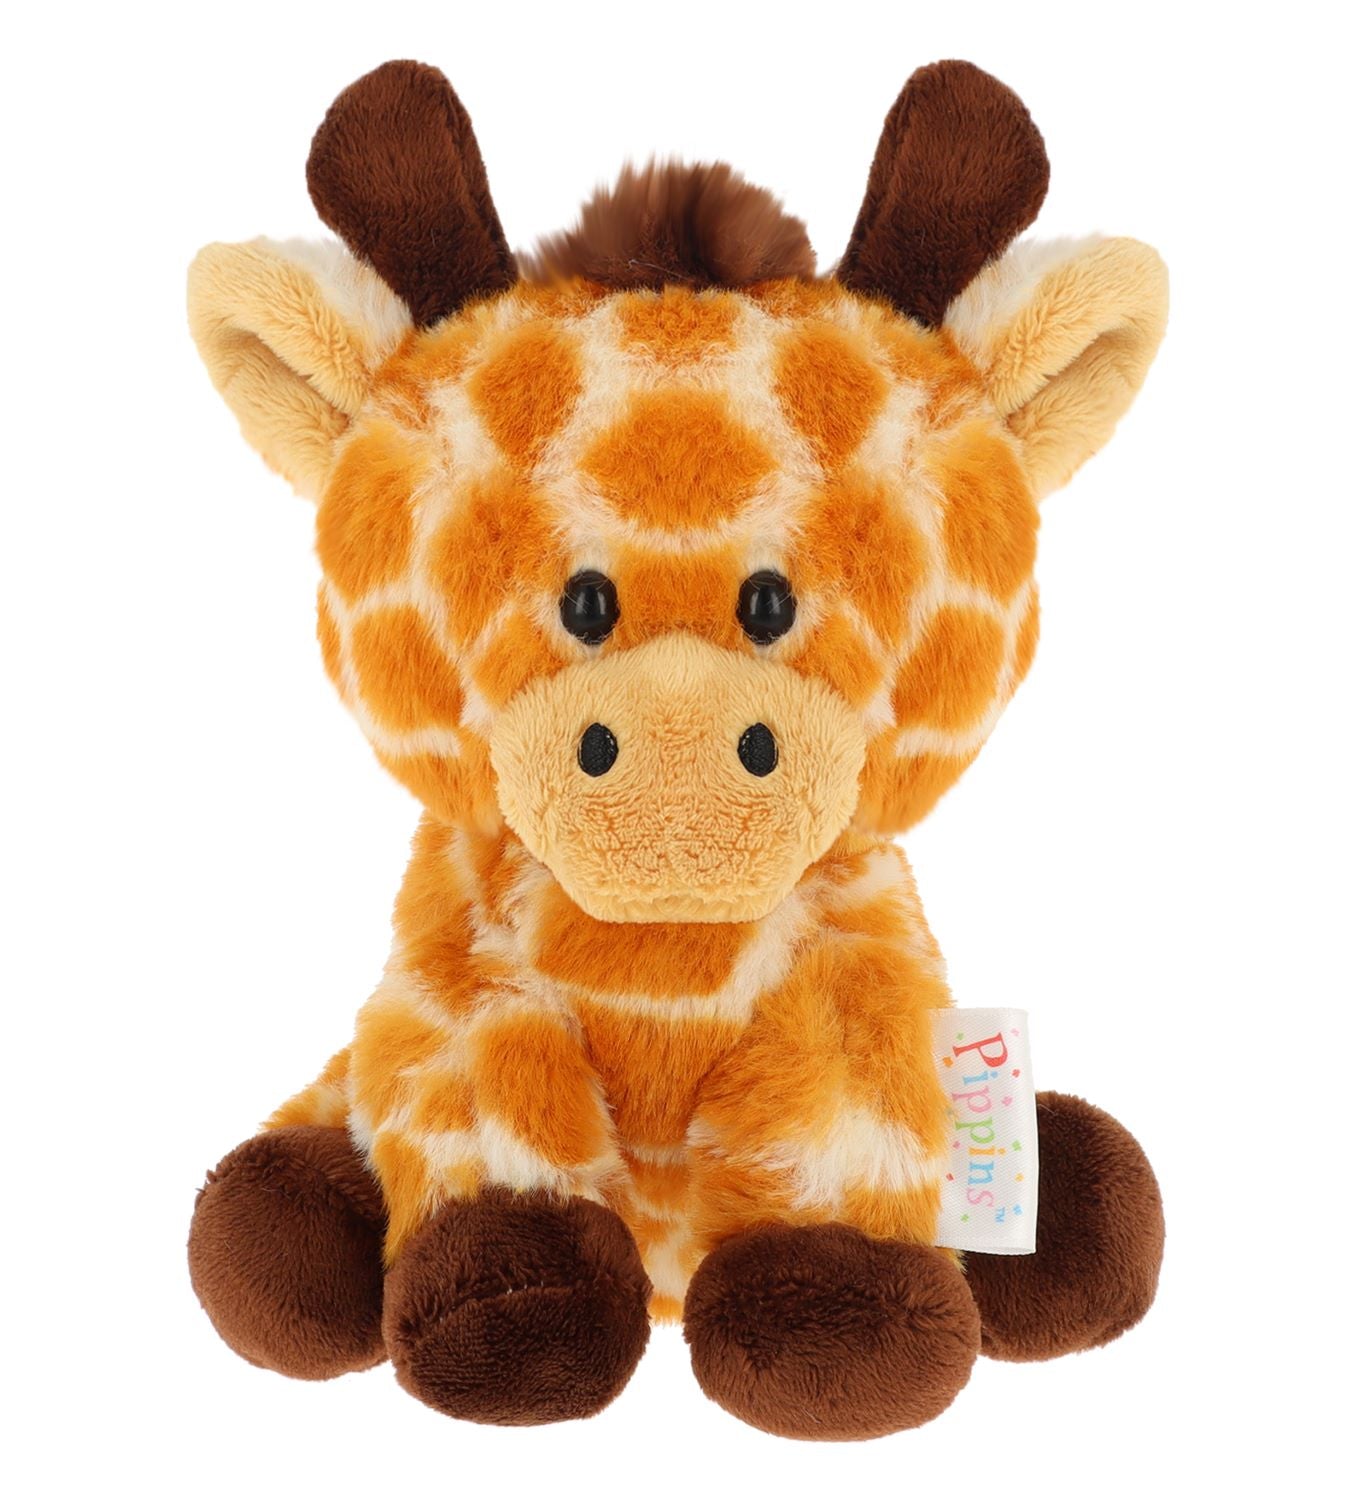 Keel Pippins George the Giraffe Soft Toy 14cm